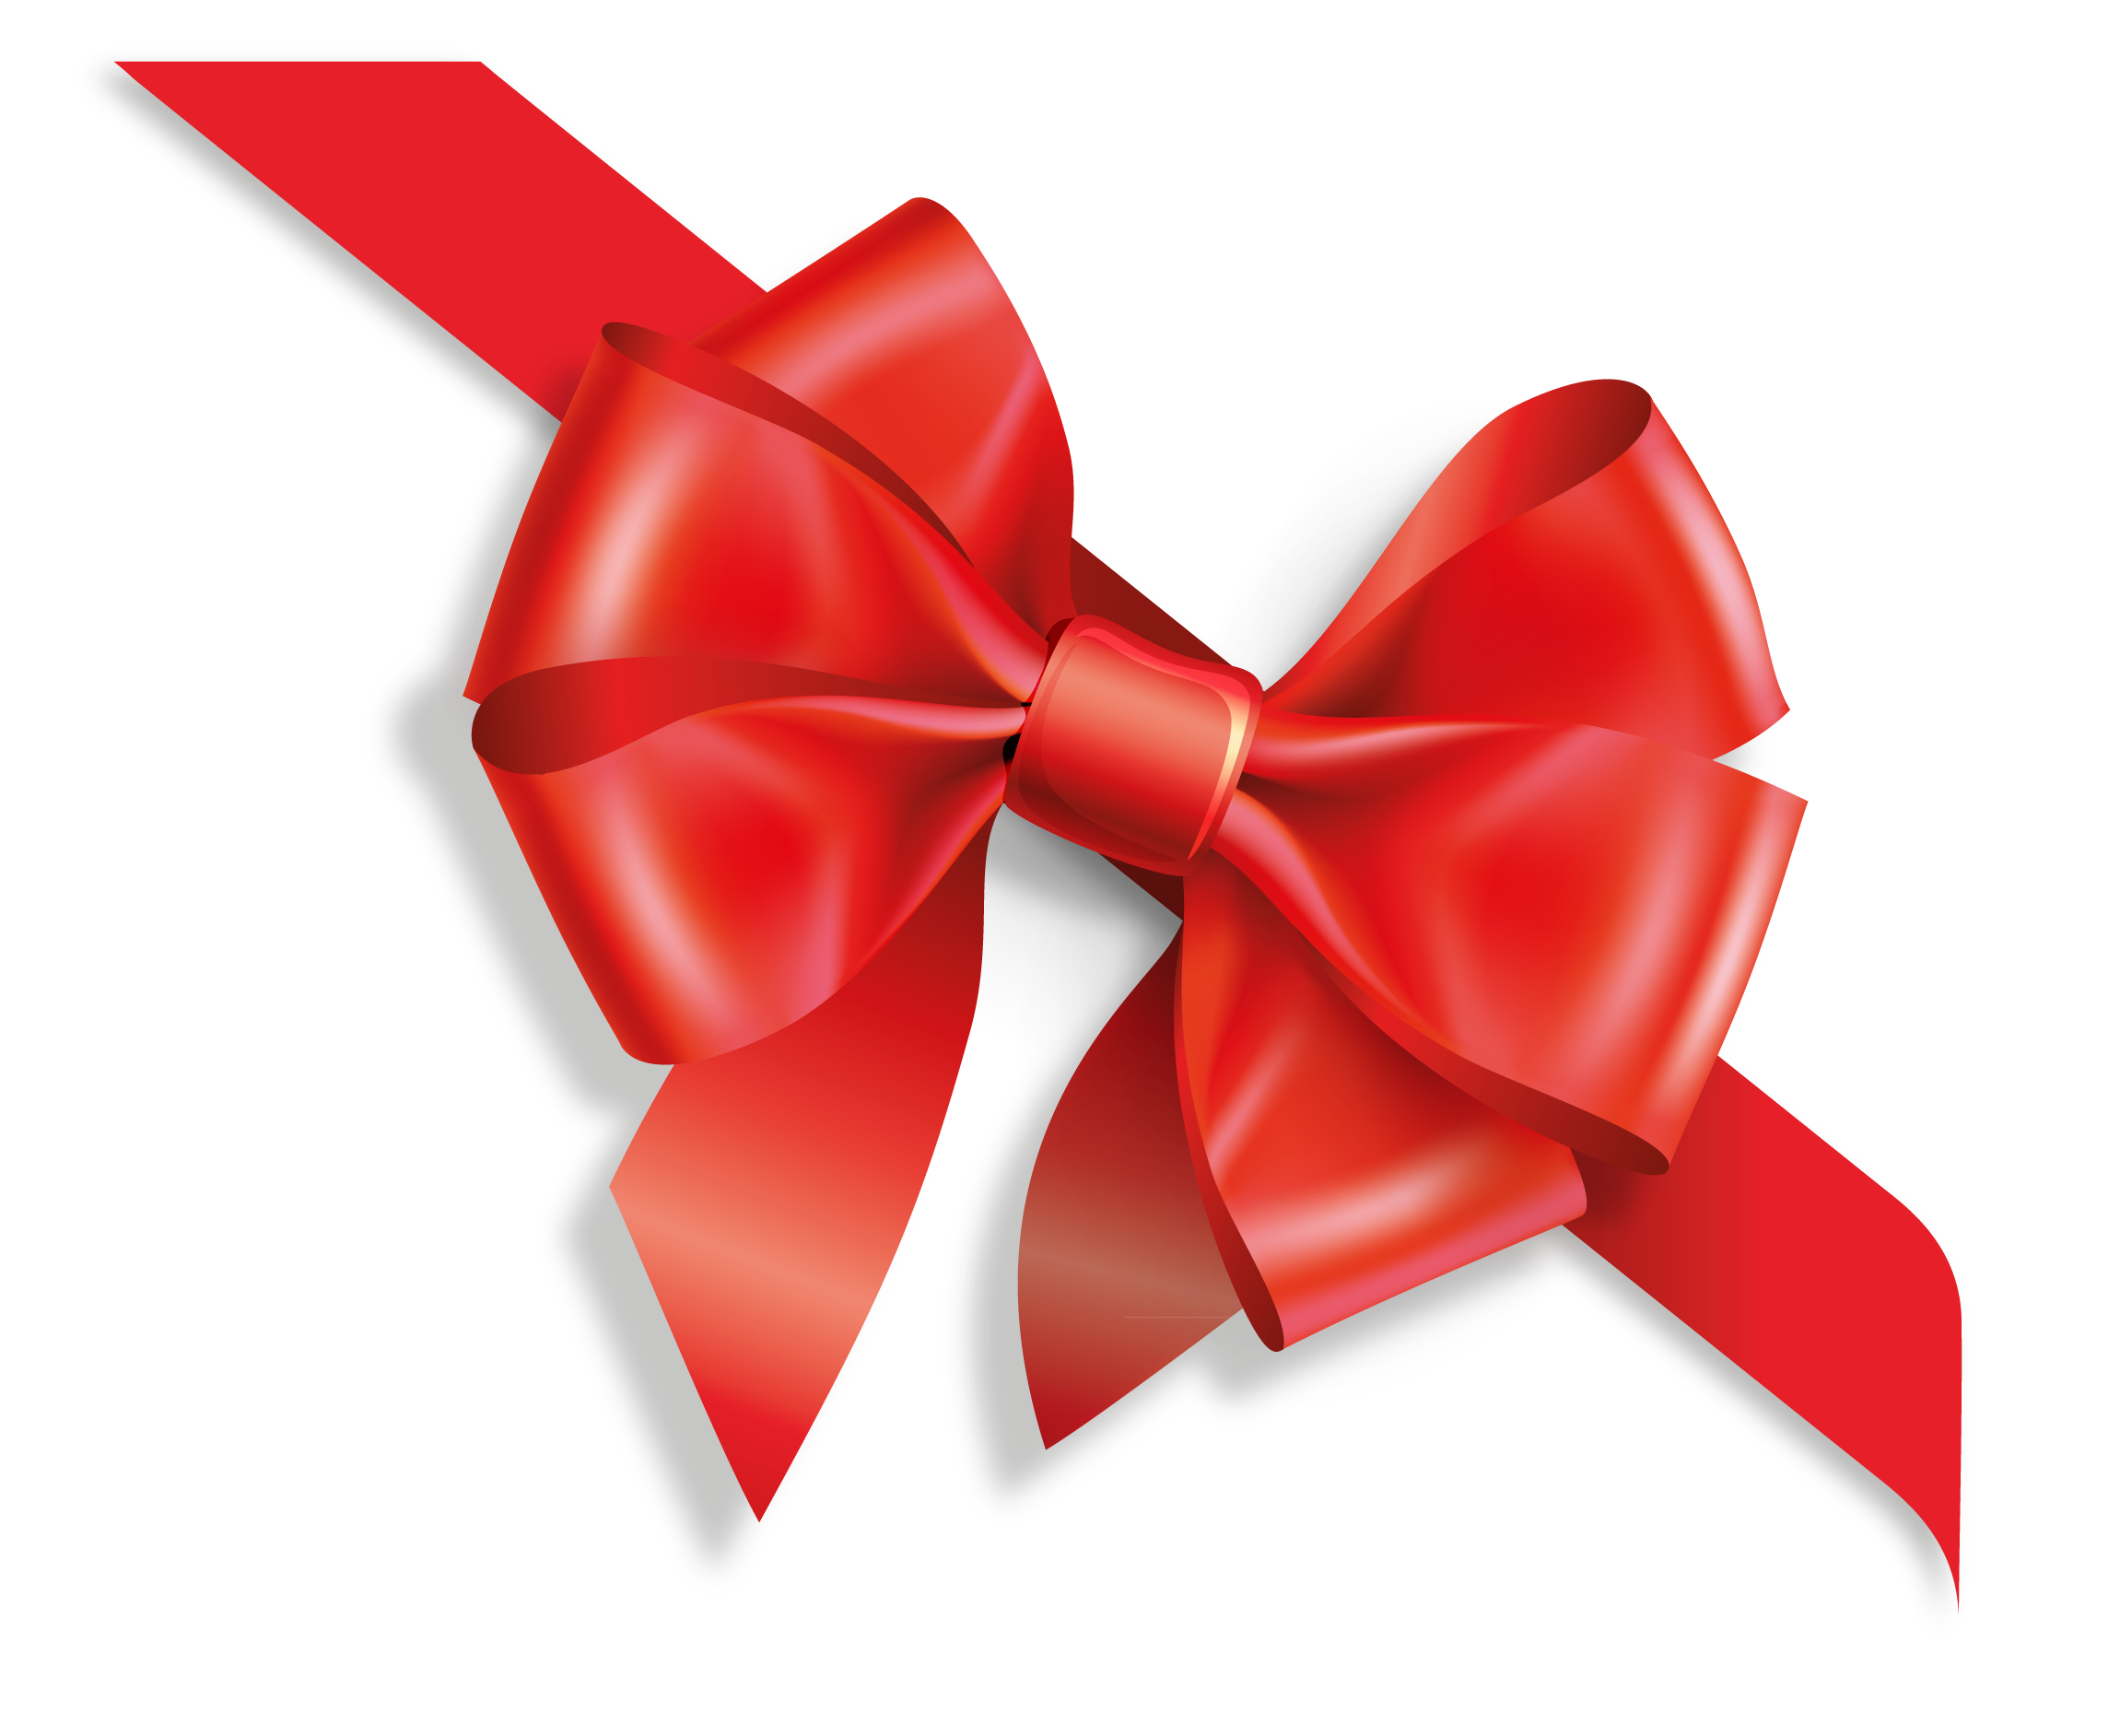 Gift Wrap Ribbon PNG Transparent Images Free Download